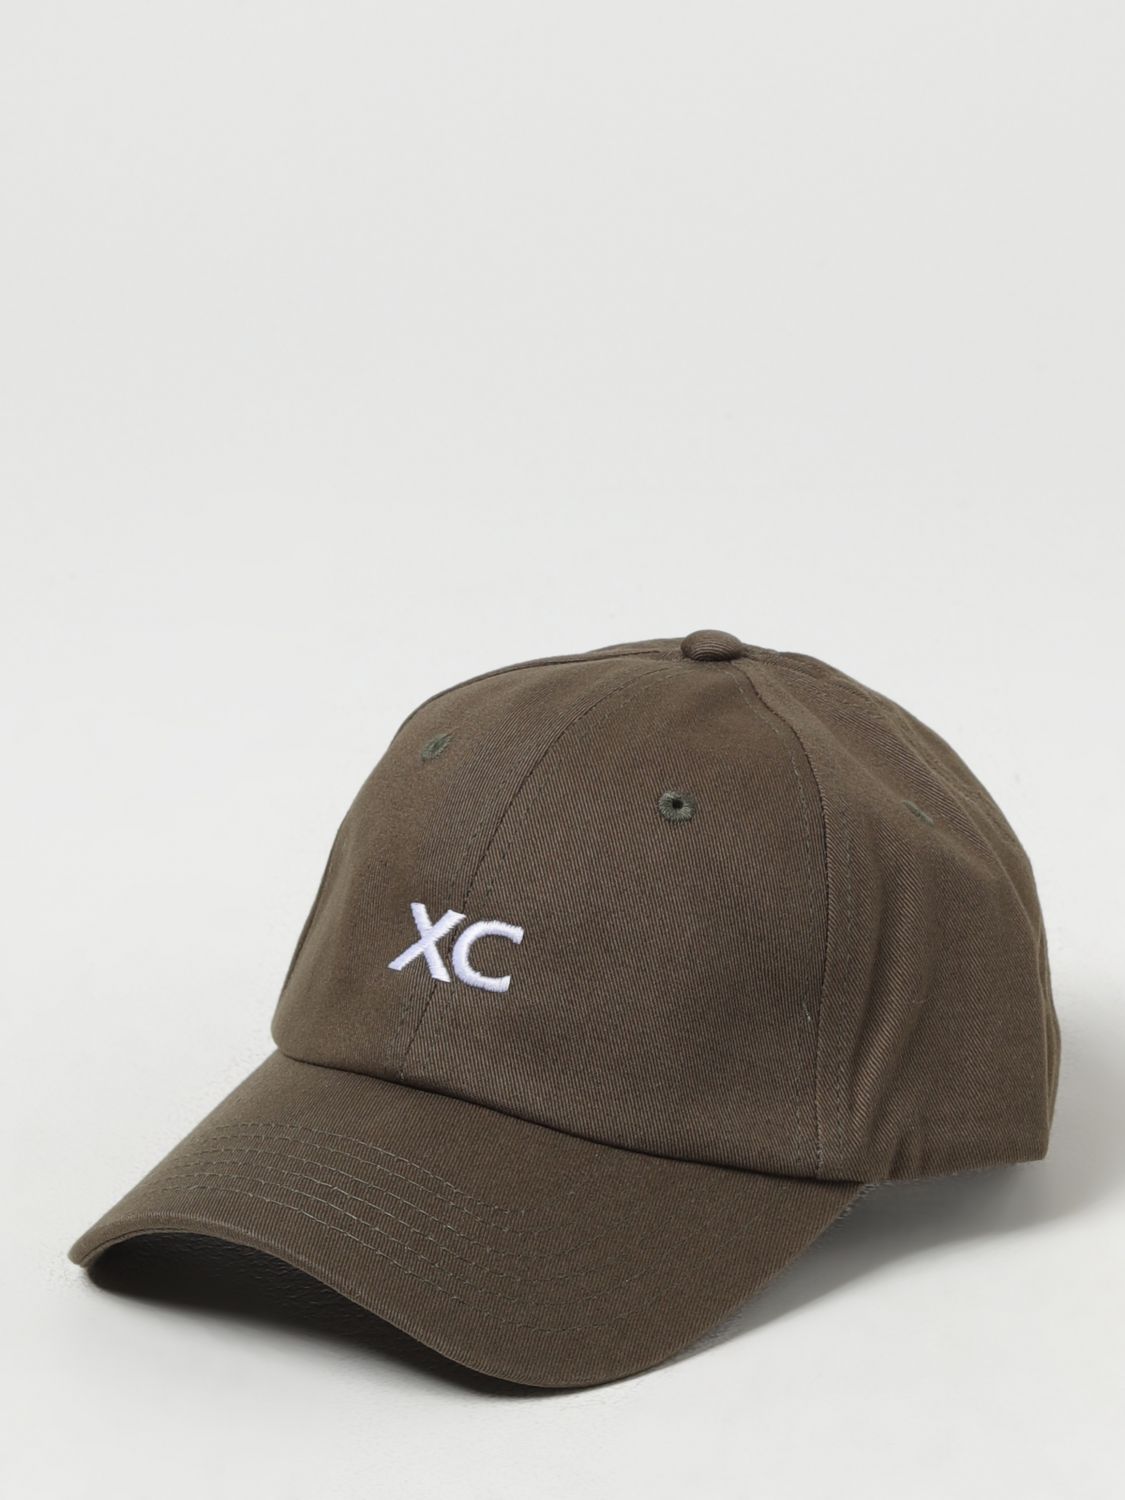 Xc Hat XC Men color Military